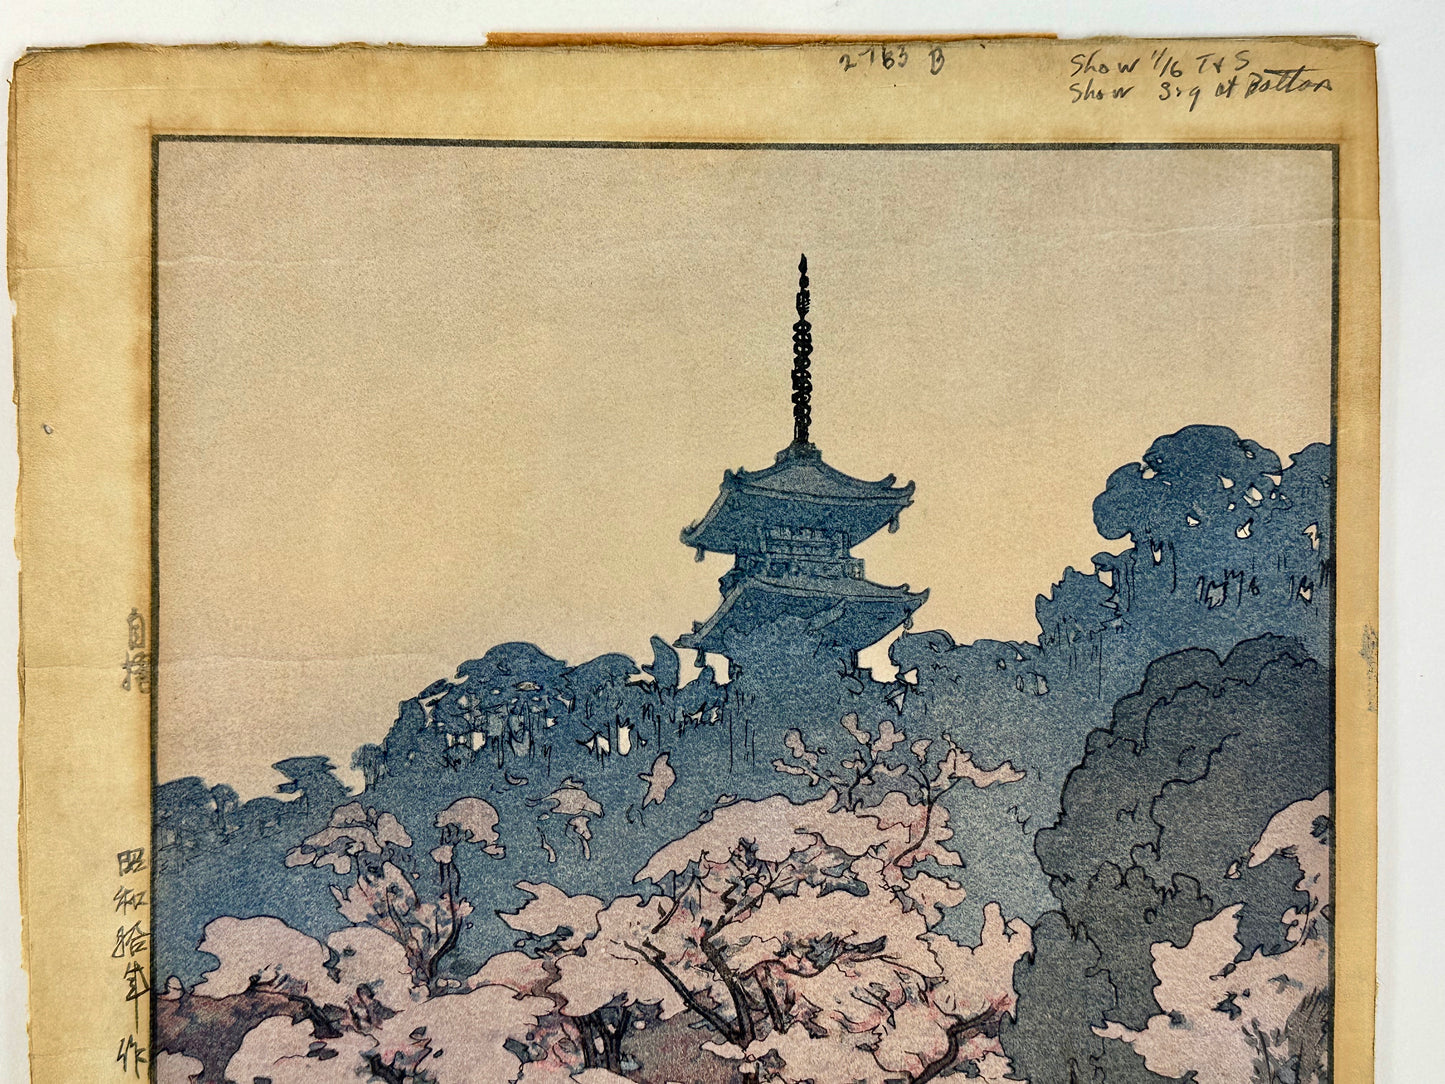 Hiroshi Yoshida Woodblock Print "Sankei-en" Garden 1935 Signed Original